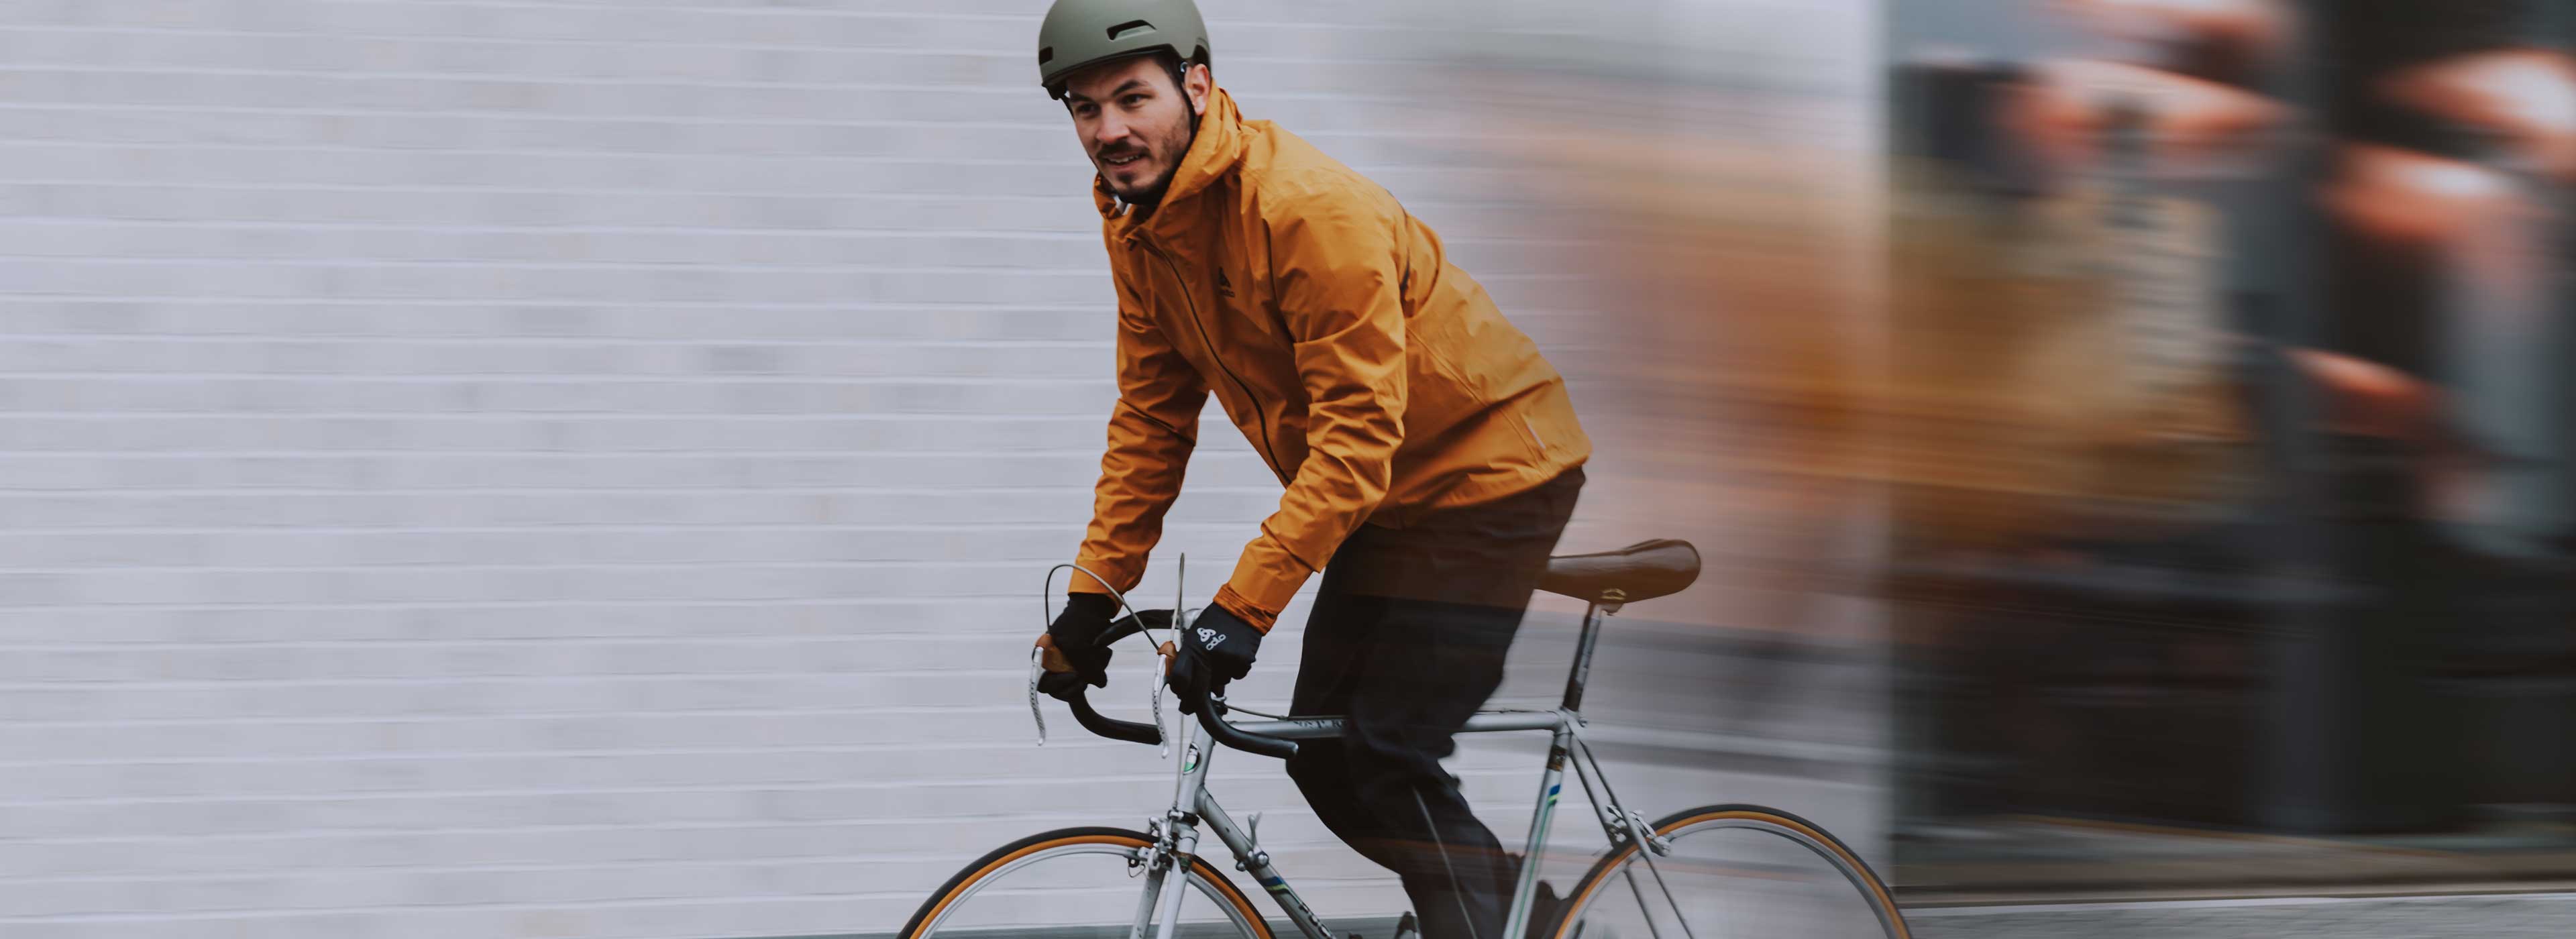 a man on a city bike, wearing a t-shirt designed for bike commuting